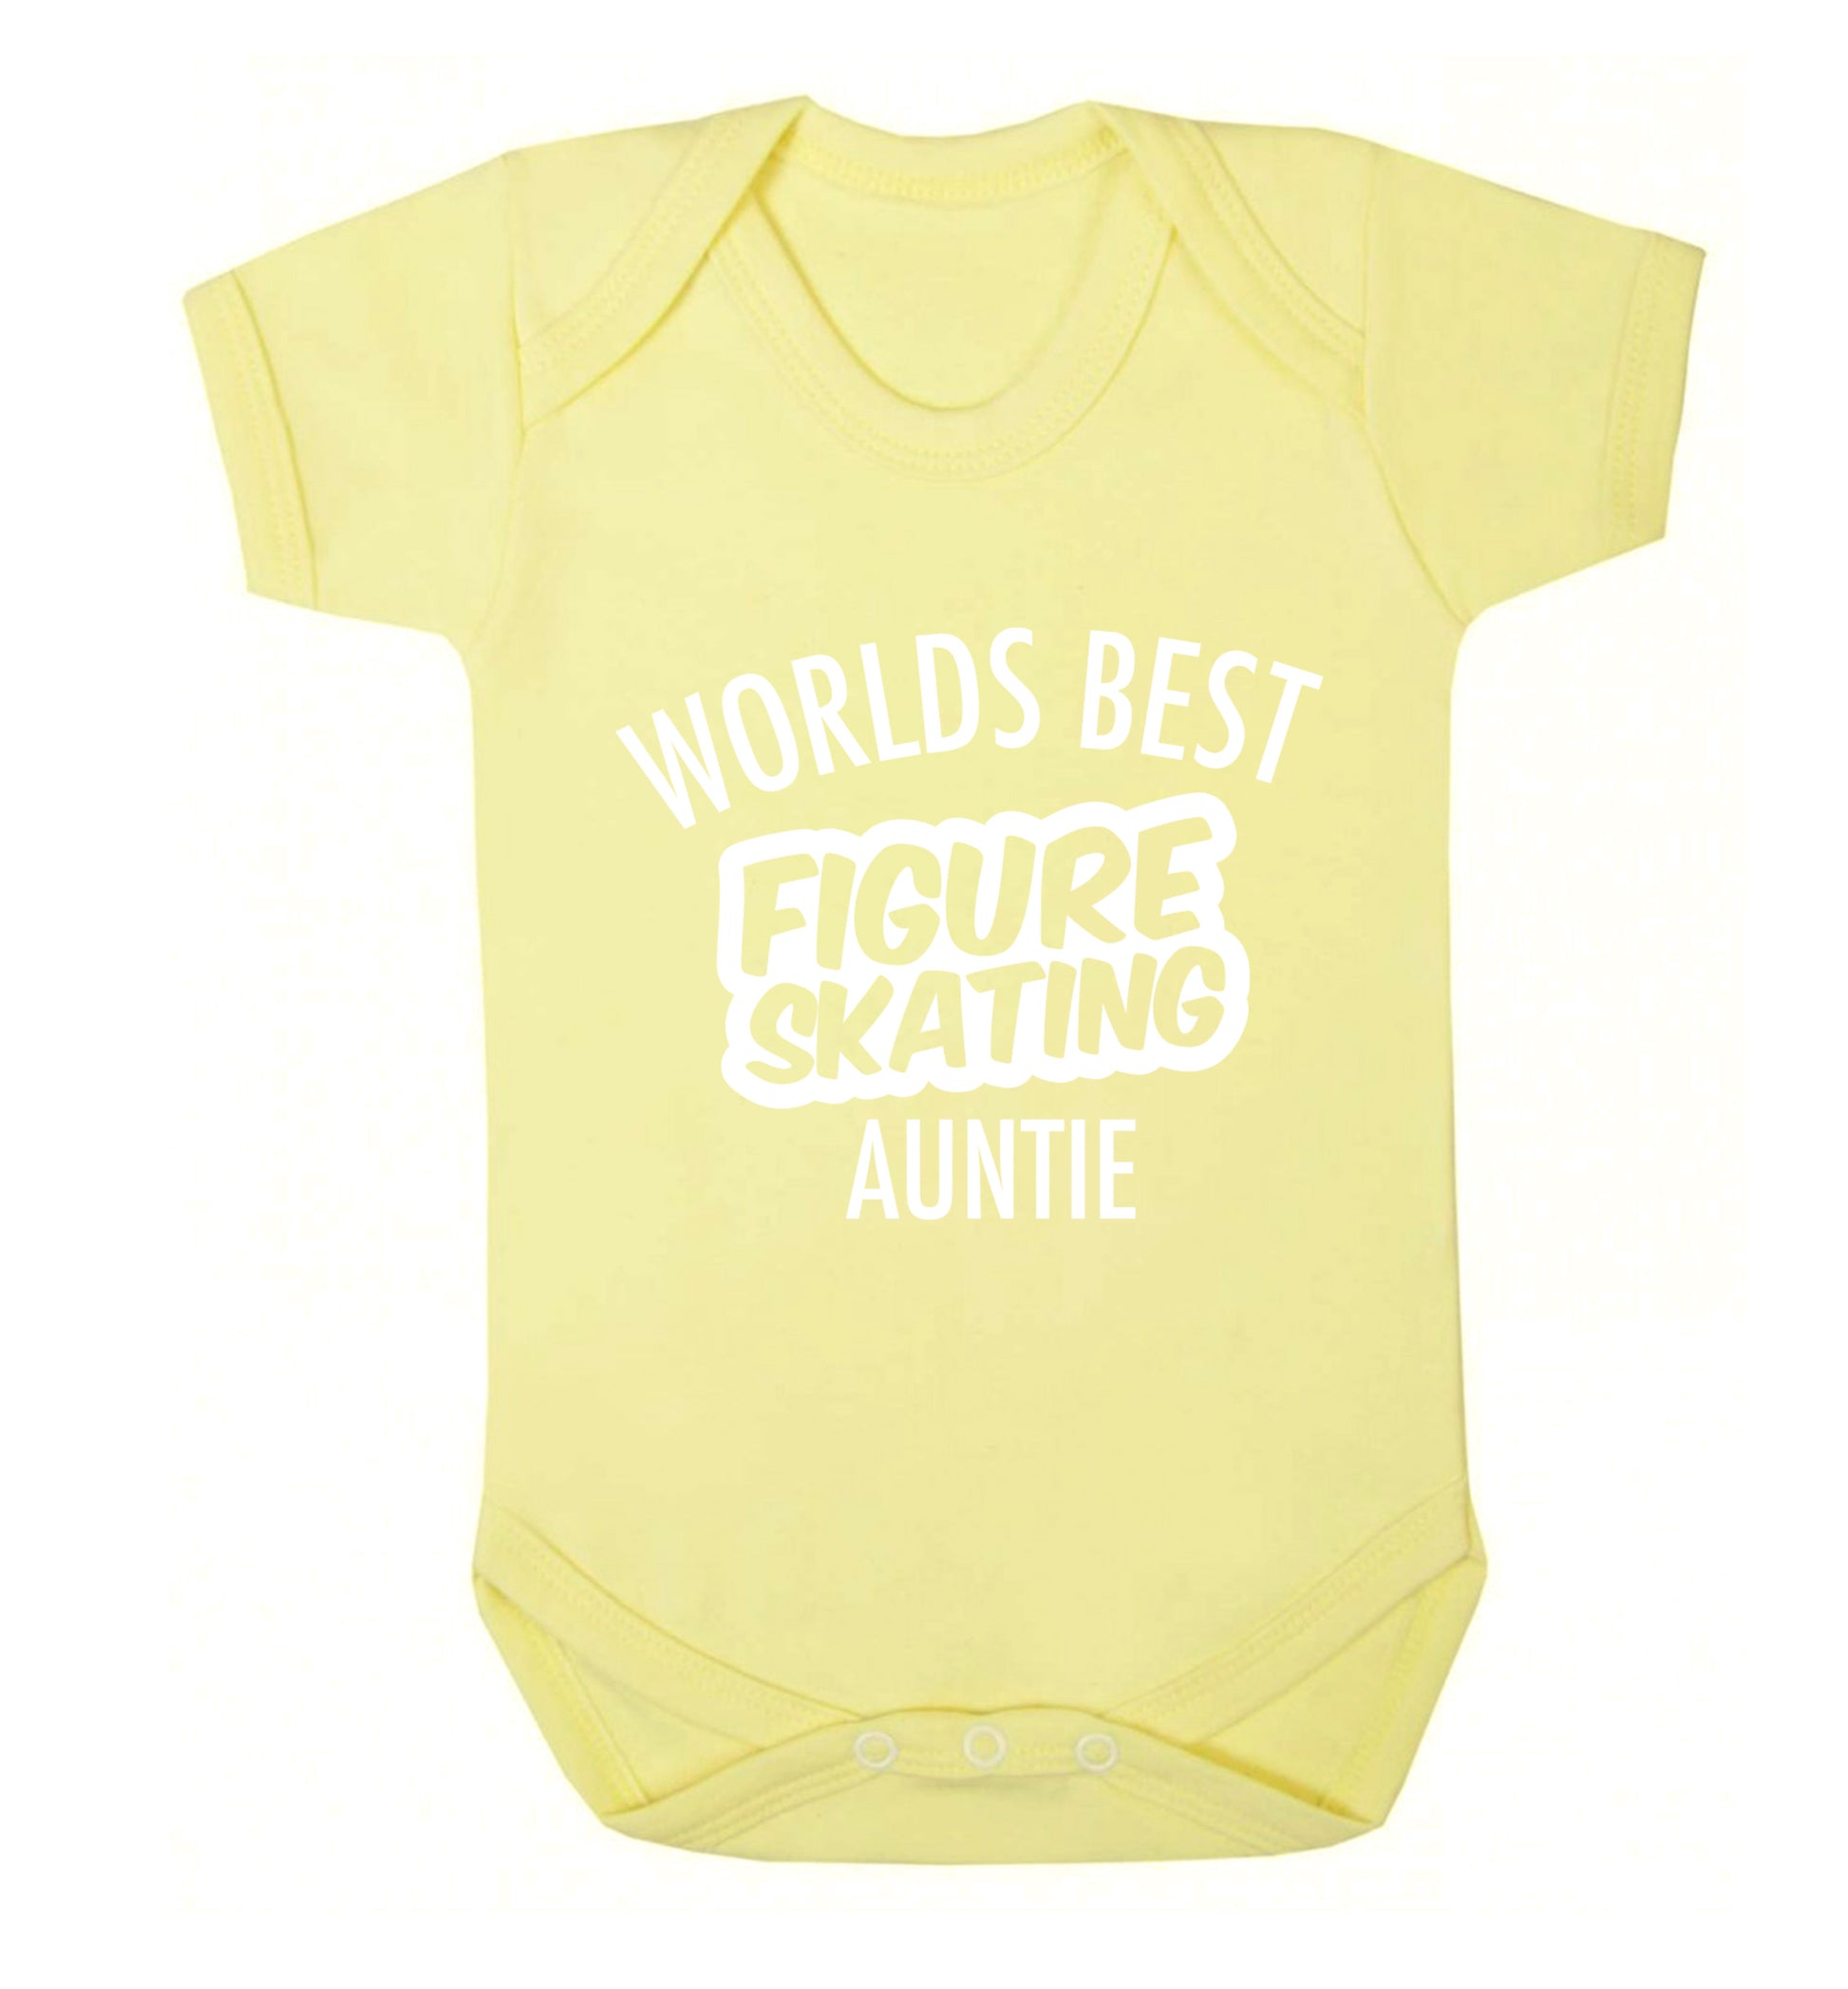 Worlds best figure skating auntie Baby Vest pale yellow 18-24 months